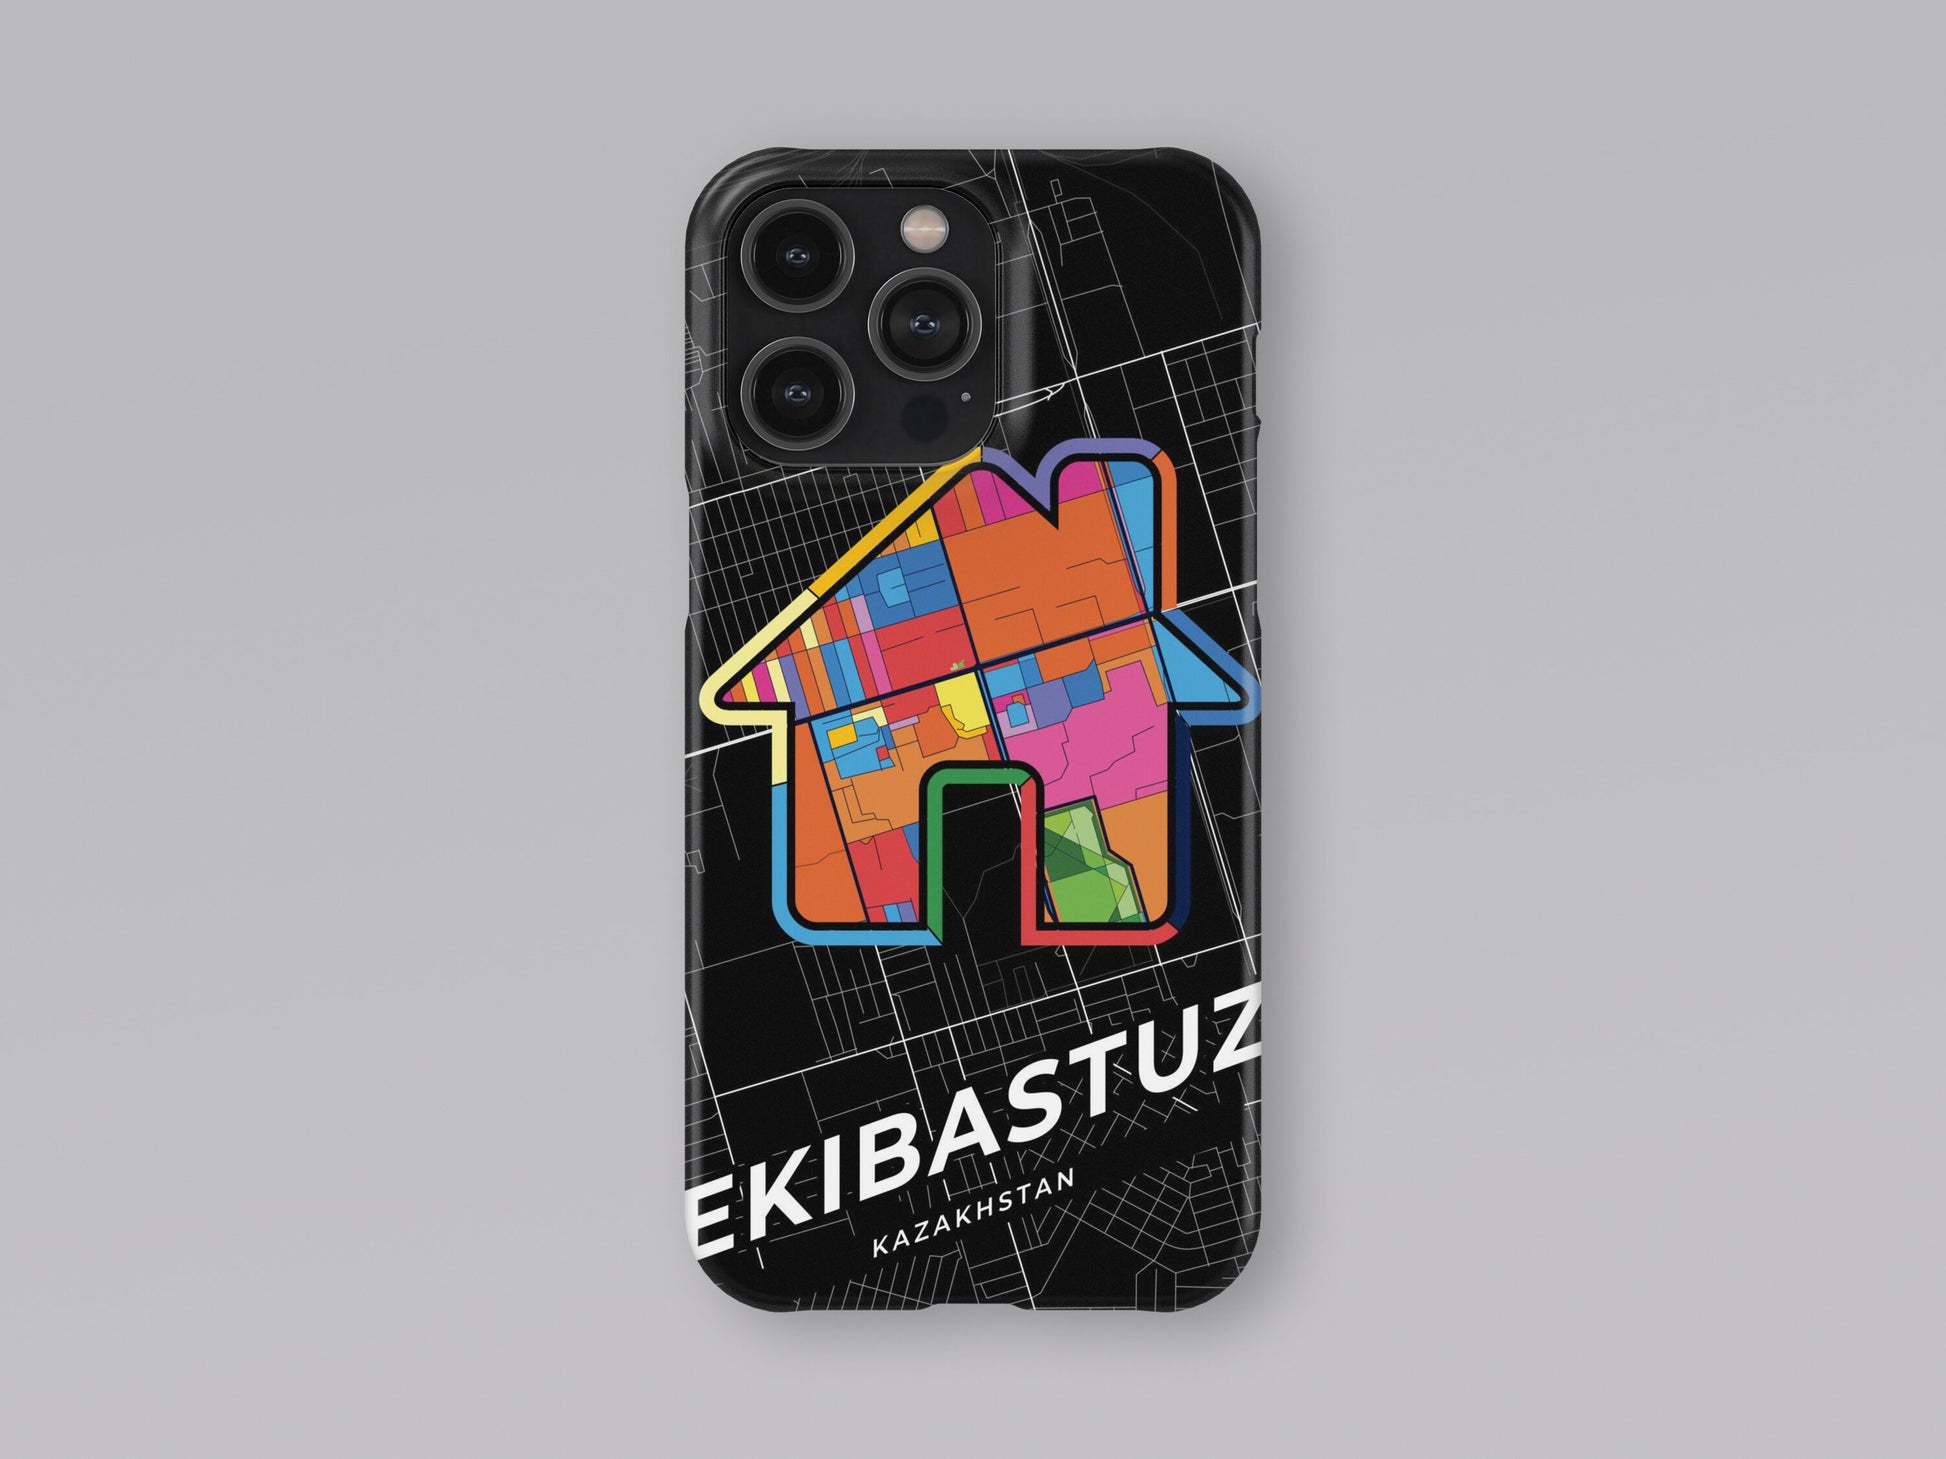 Ekibastuz Kazakhstan slim phone case with colorful icon. Birthday, wedding or housewarming gift. Couple match cases. 3